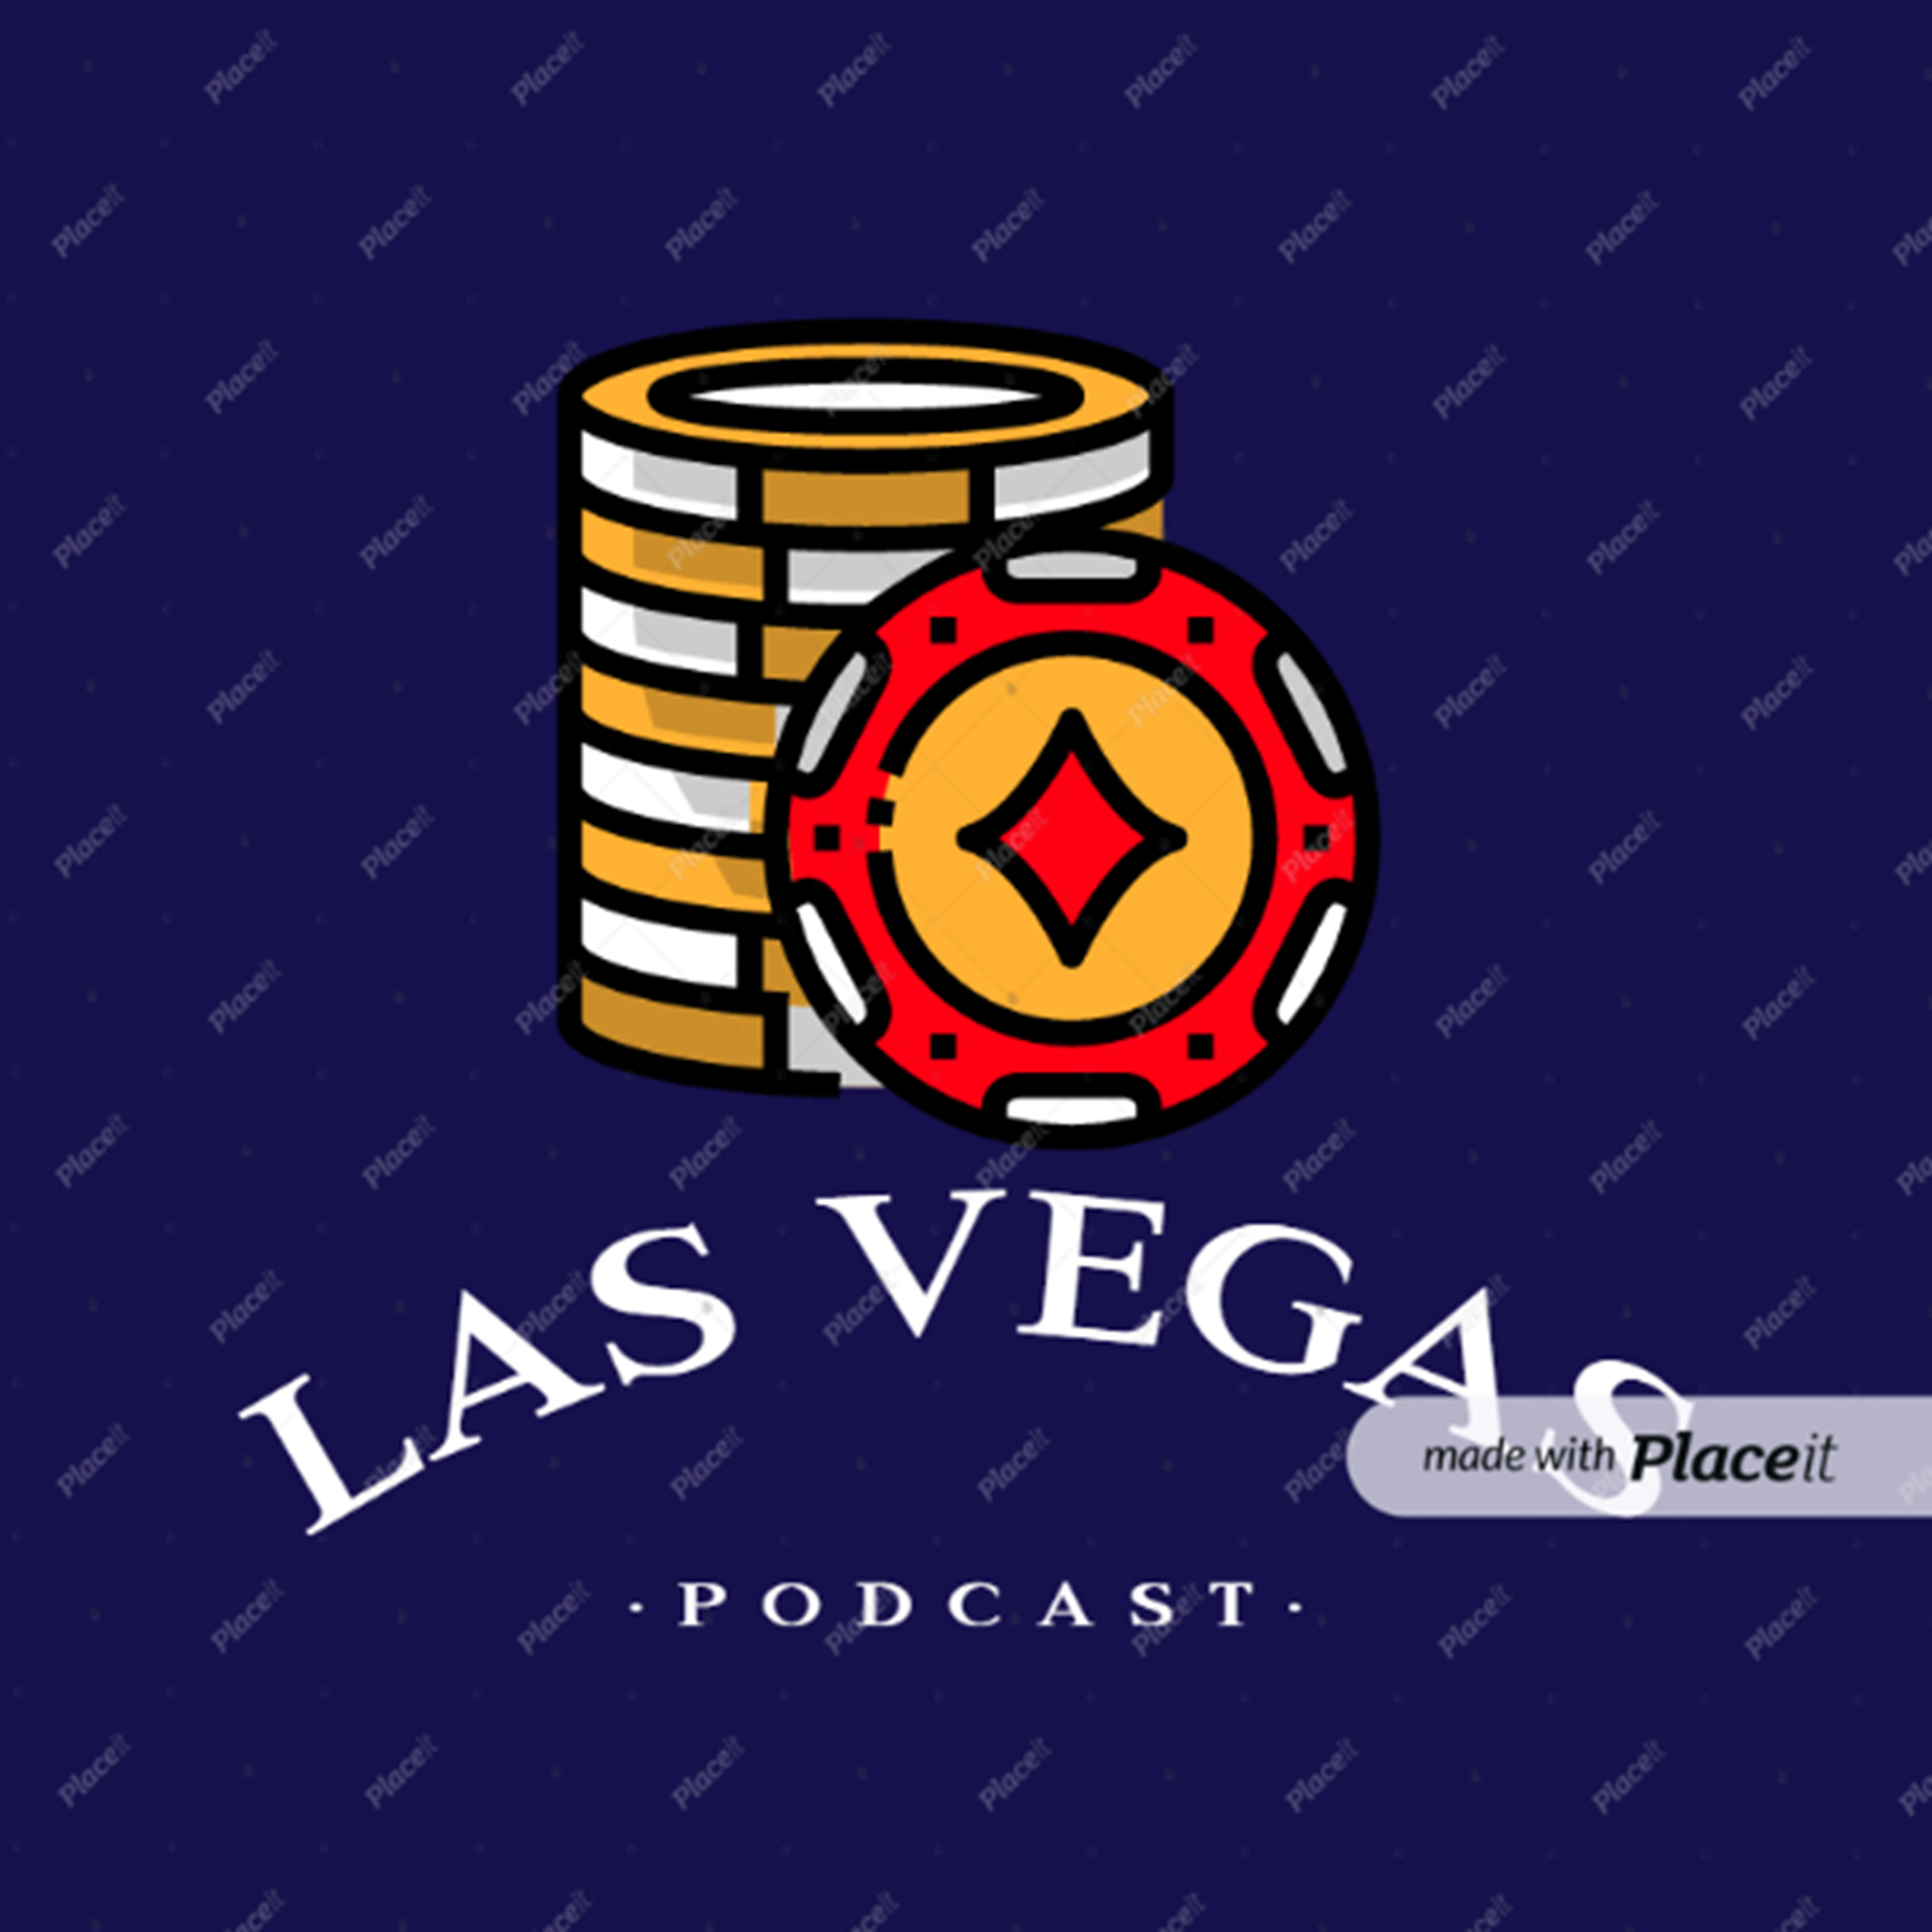 Las Vegas Podcast